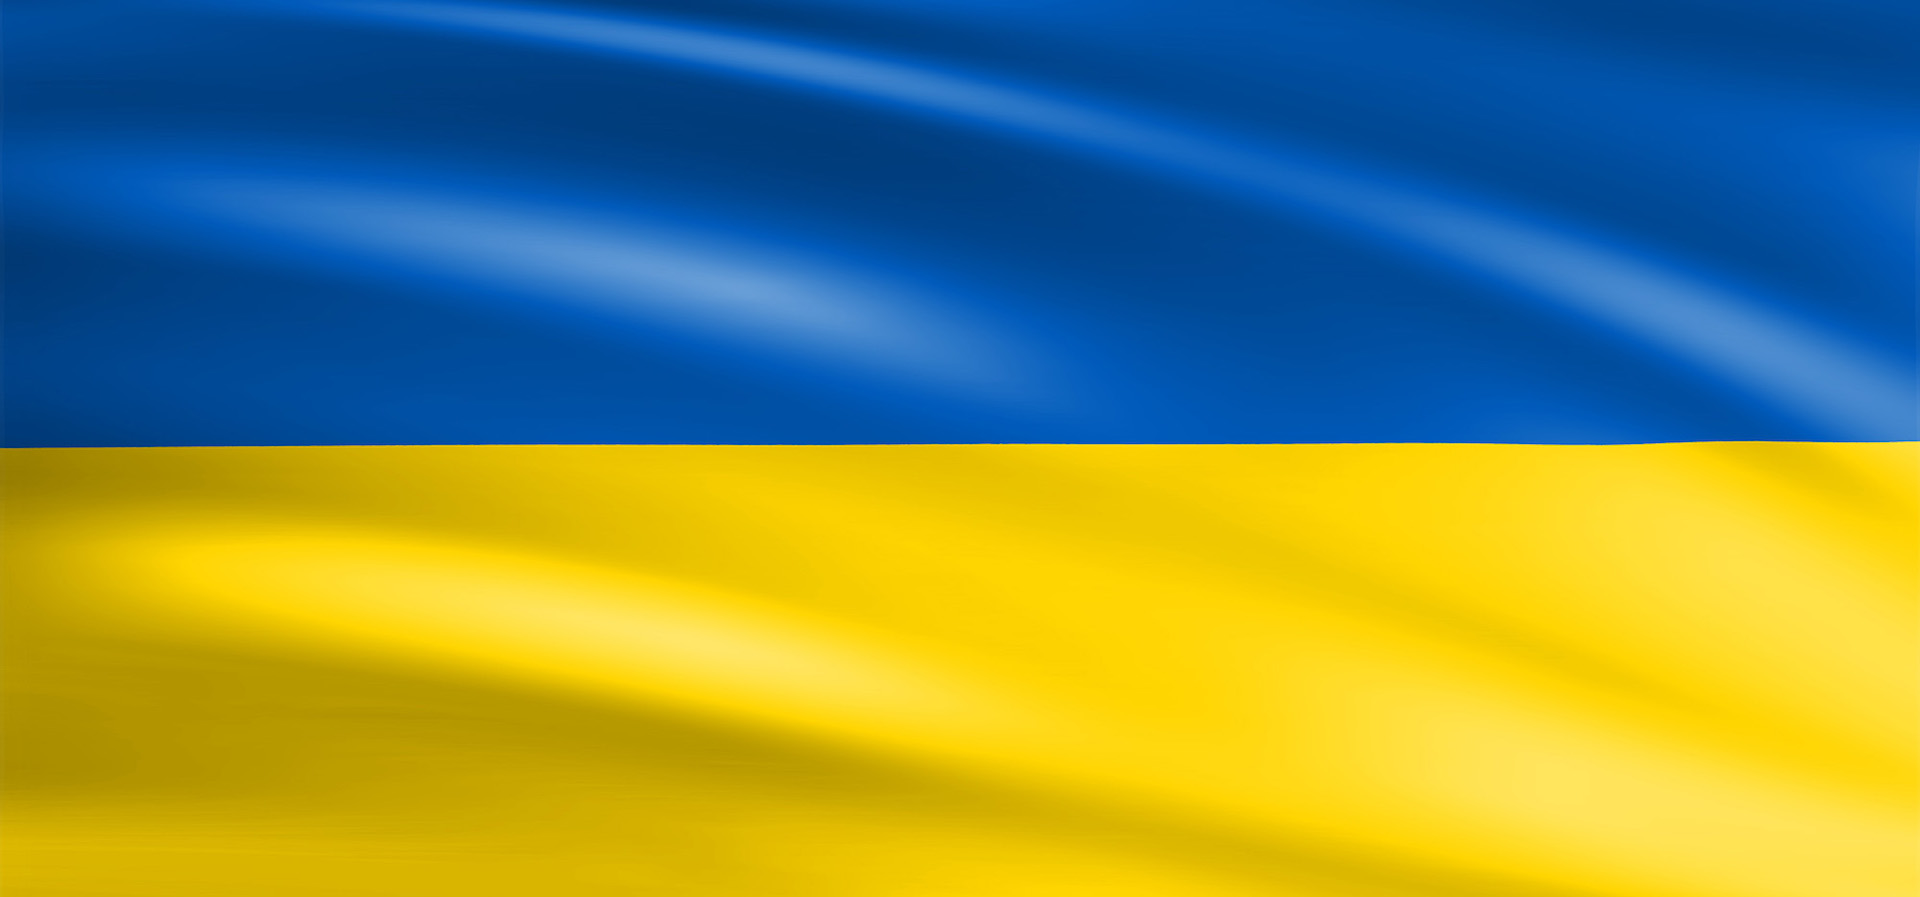 Stand for Ukraine